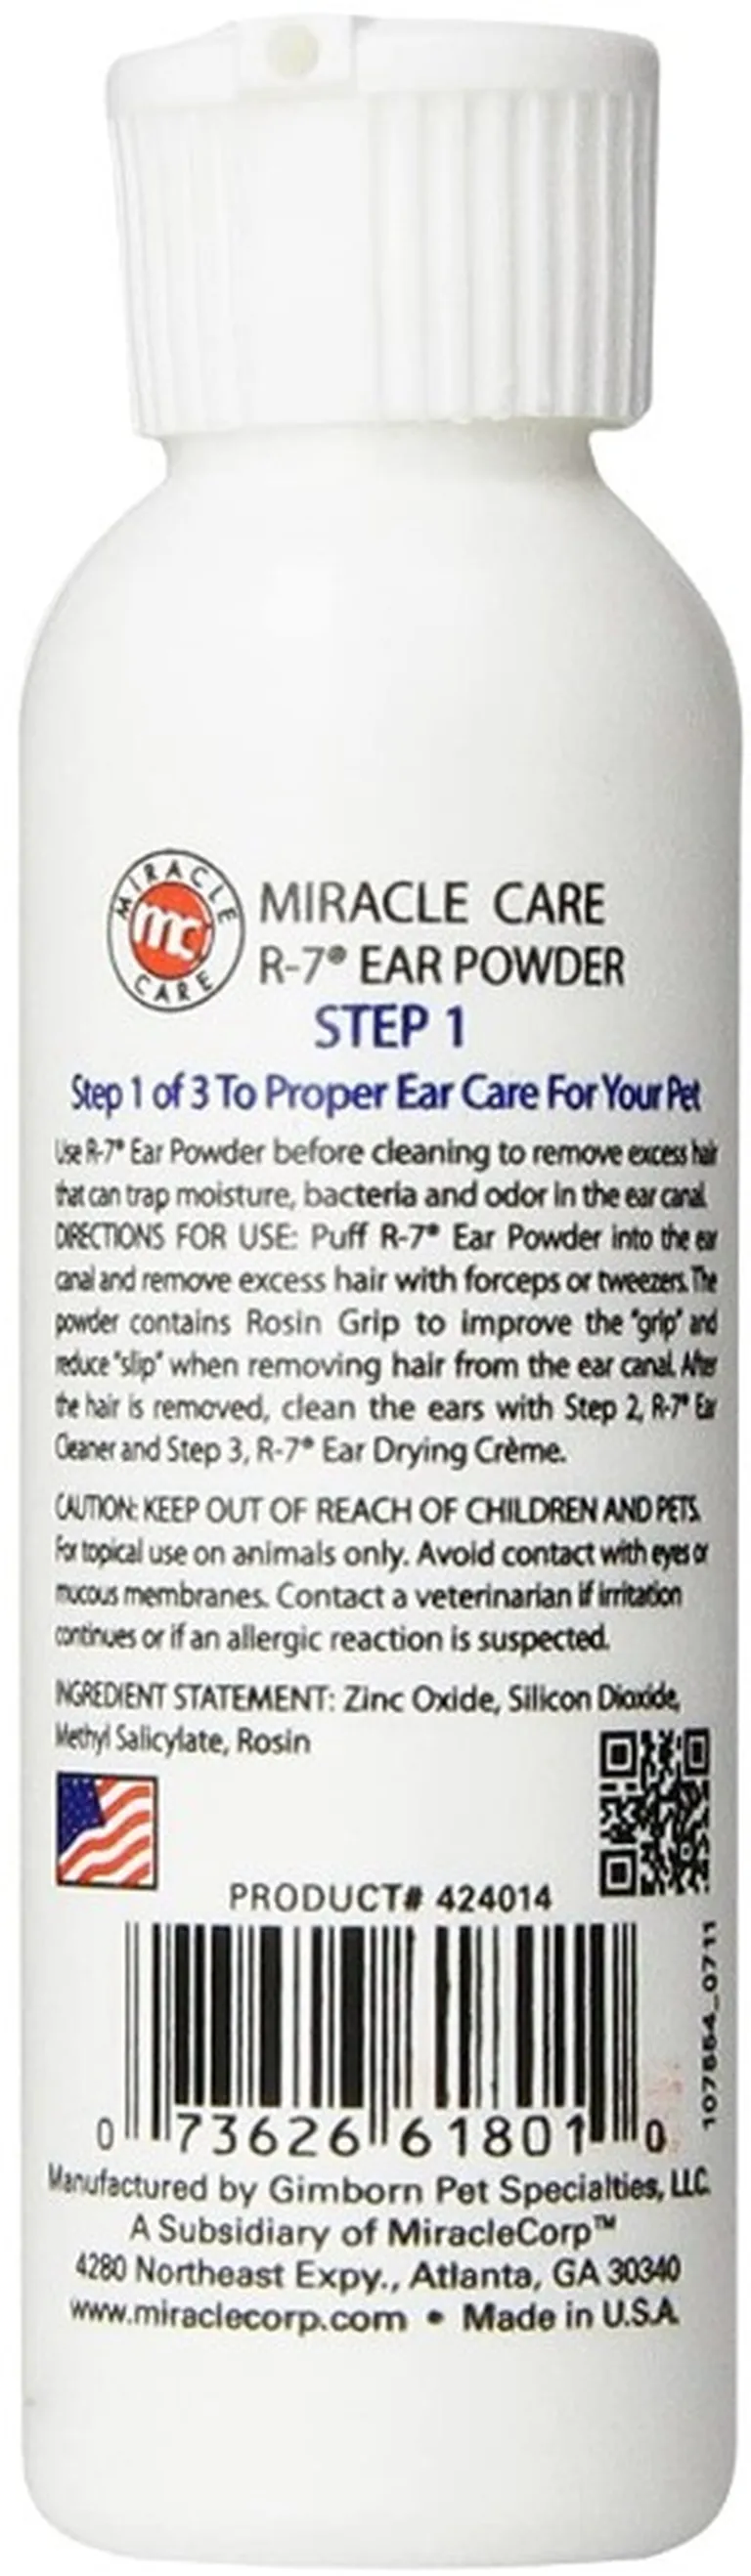 Miracle Care Ear Powder Step 1 Photo 2